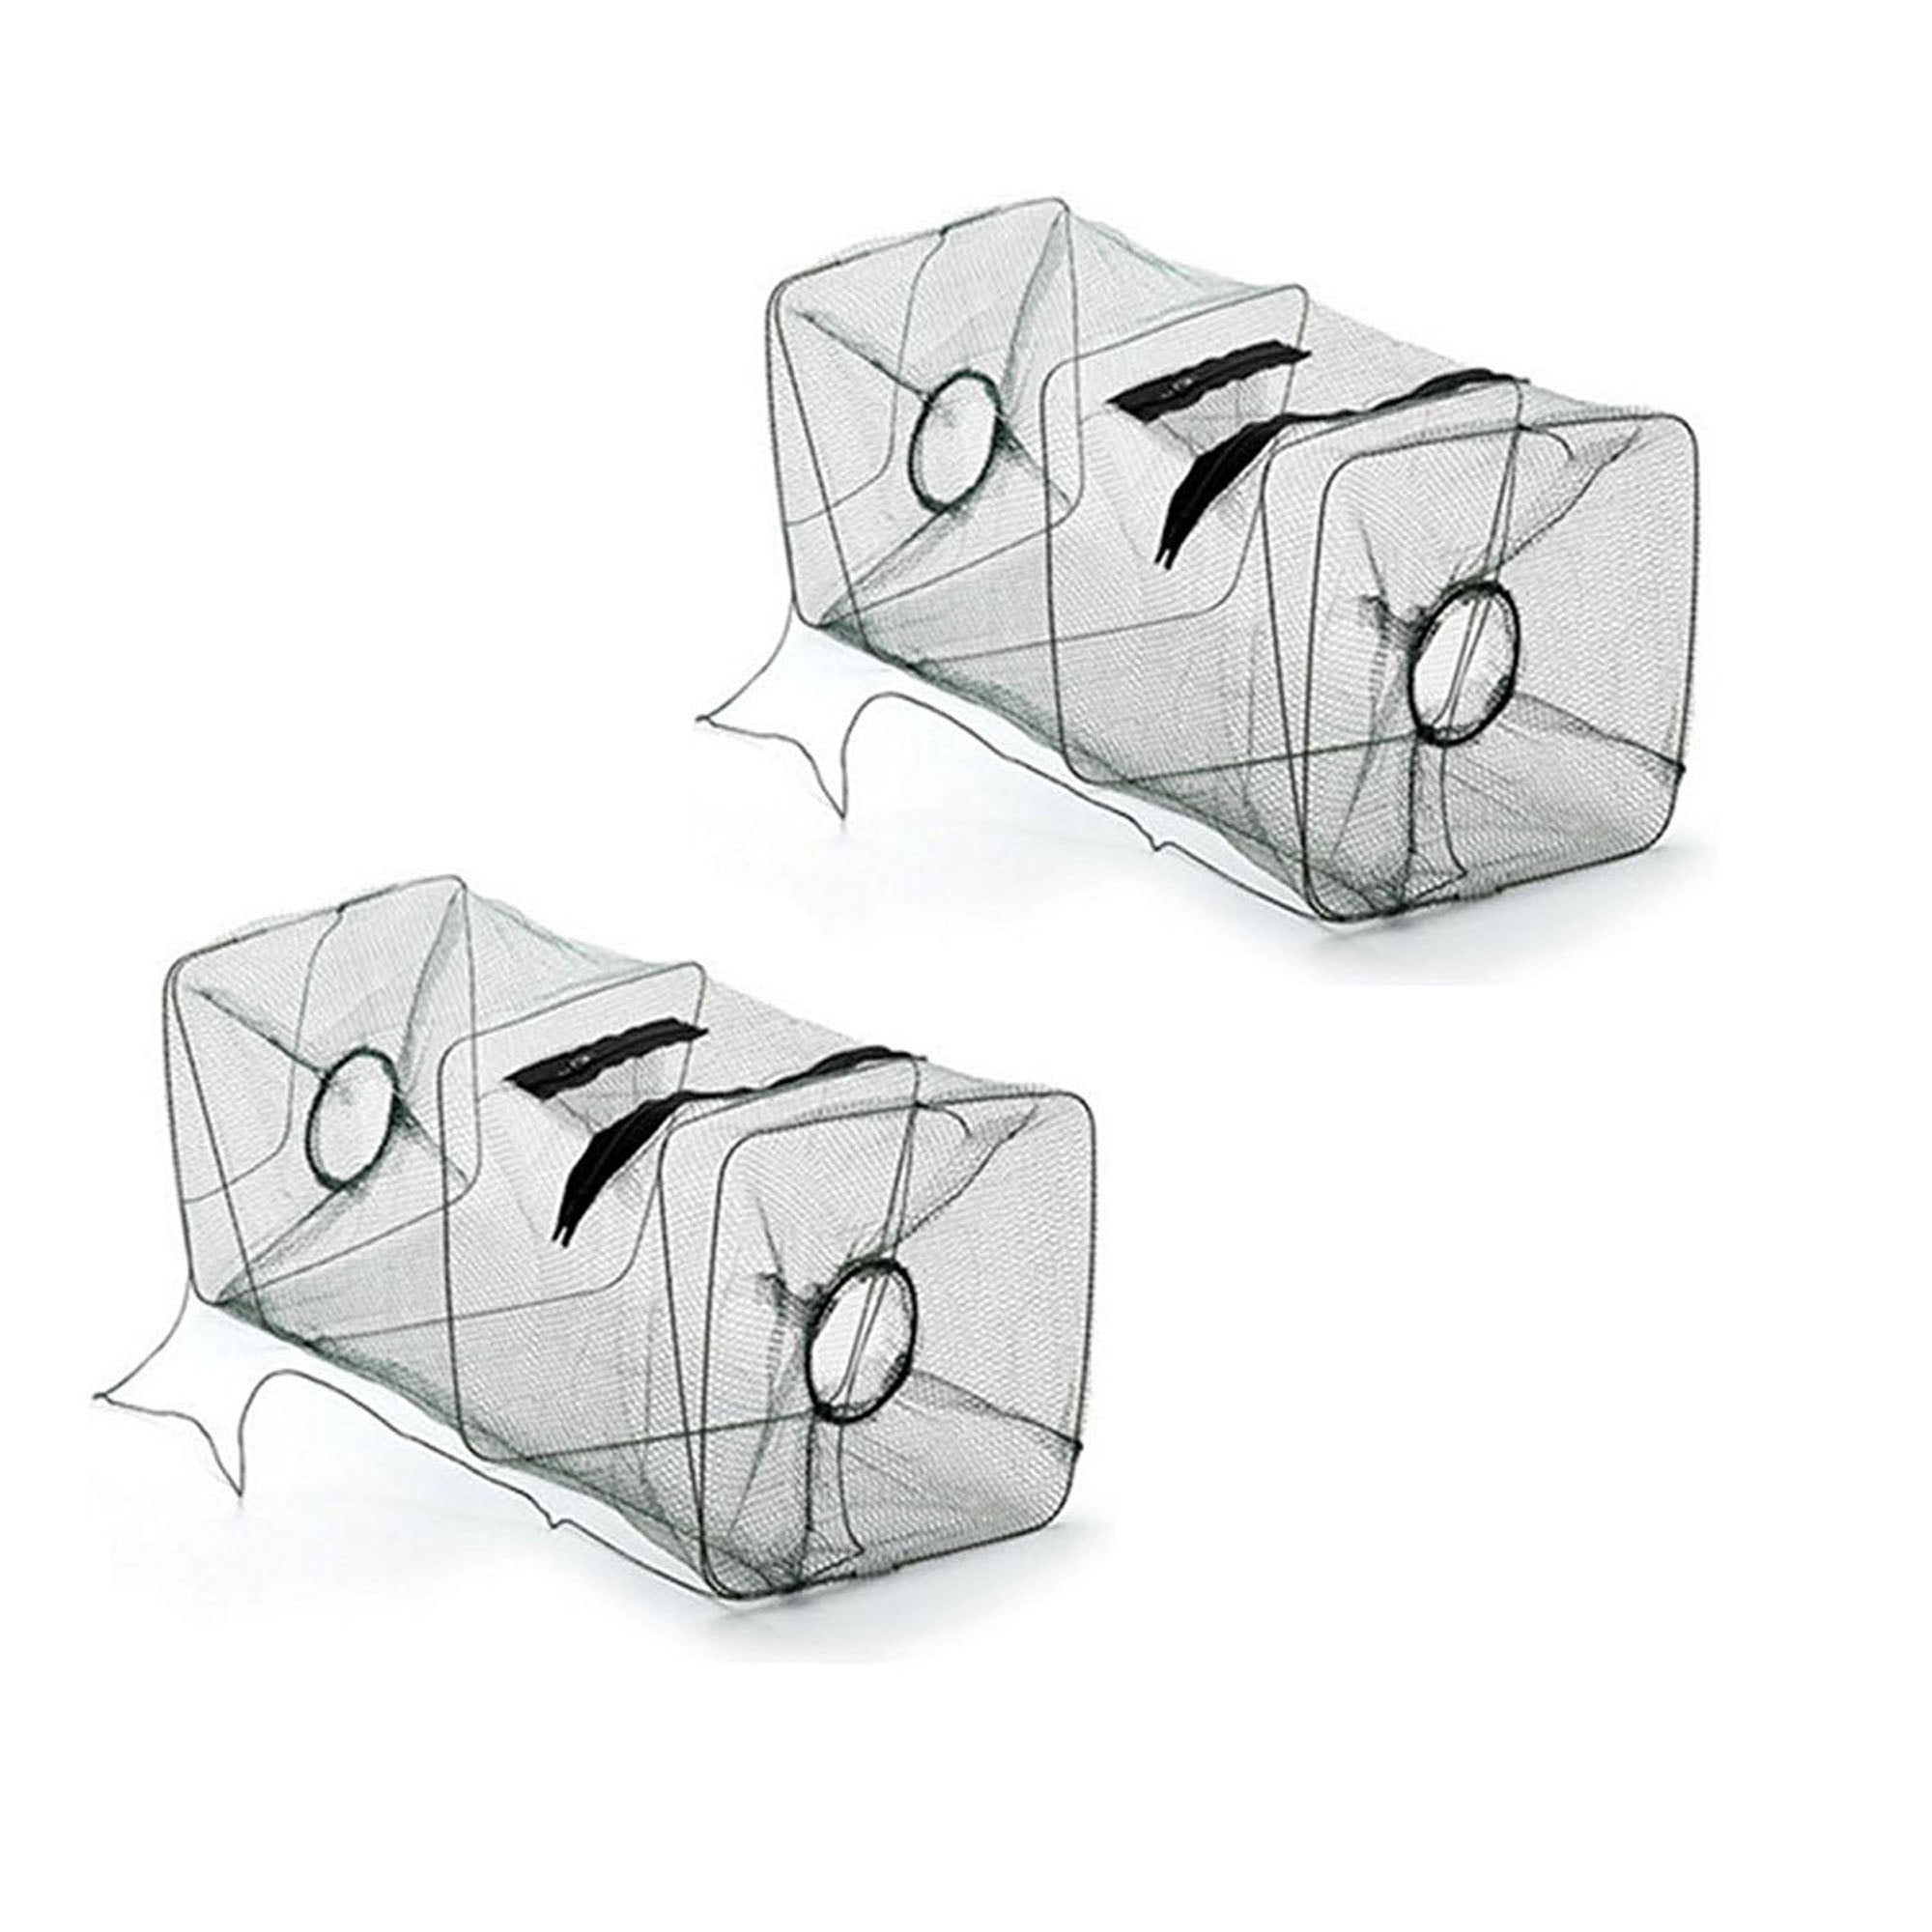  Foldable Fishing Net Trap and Fish Minnow Trap